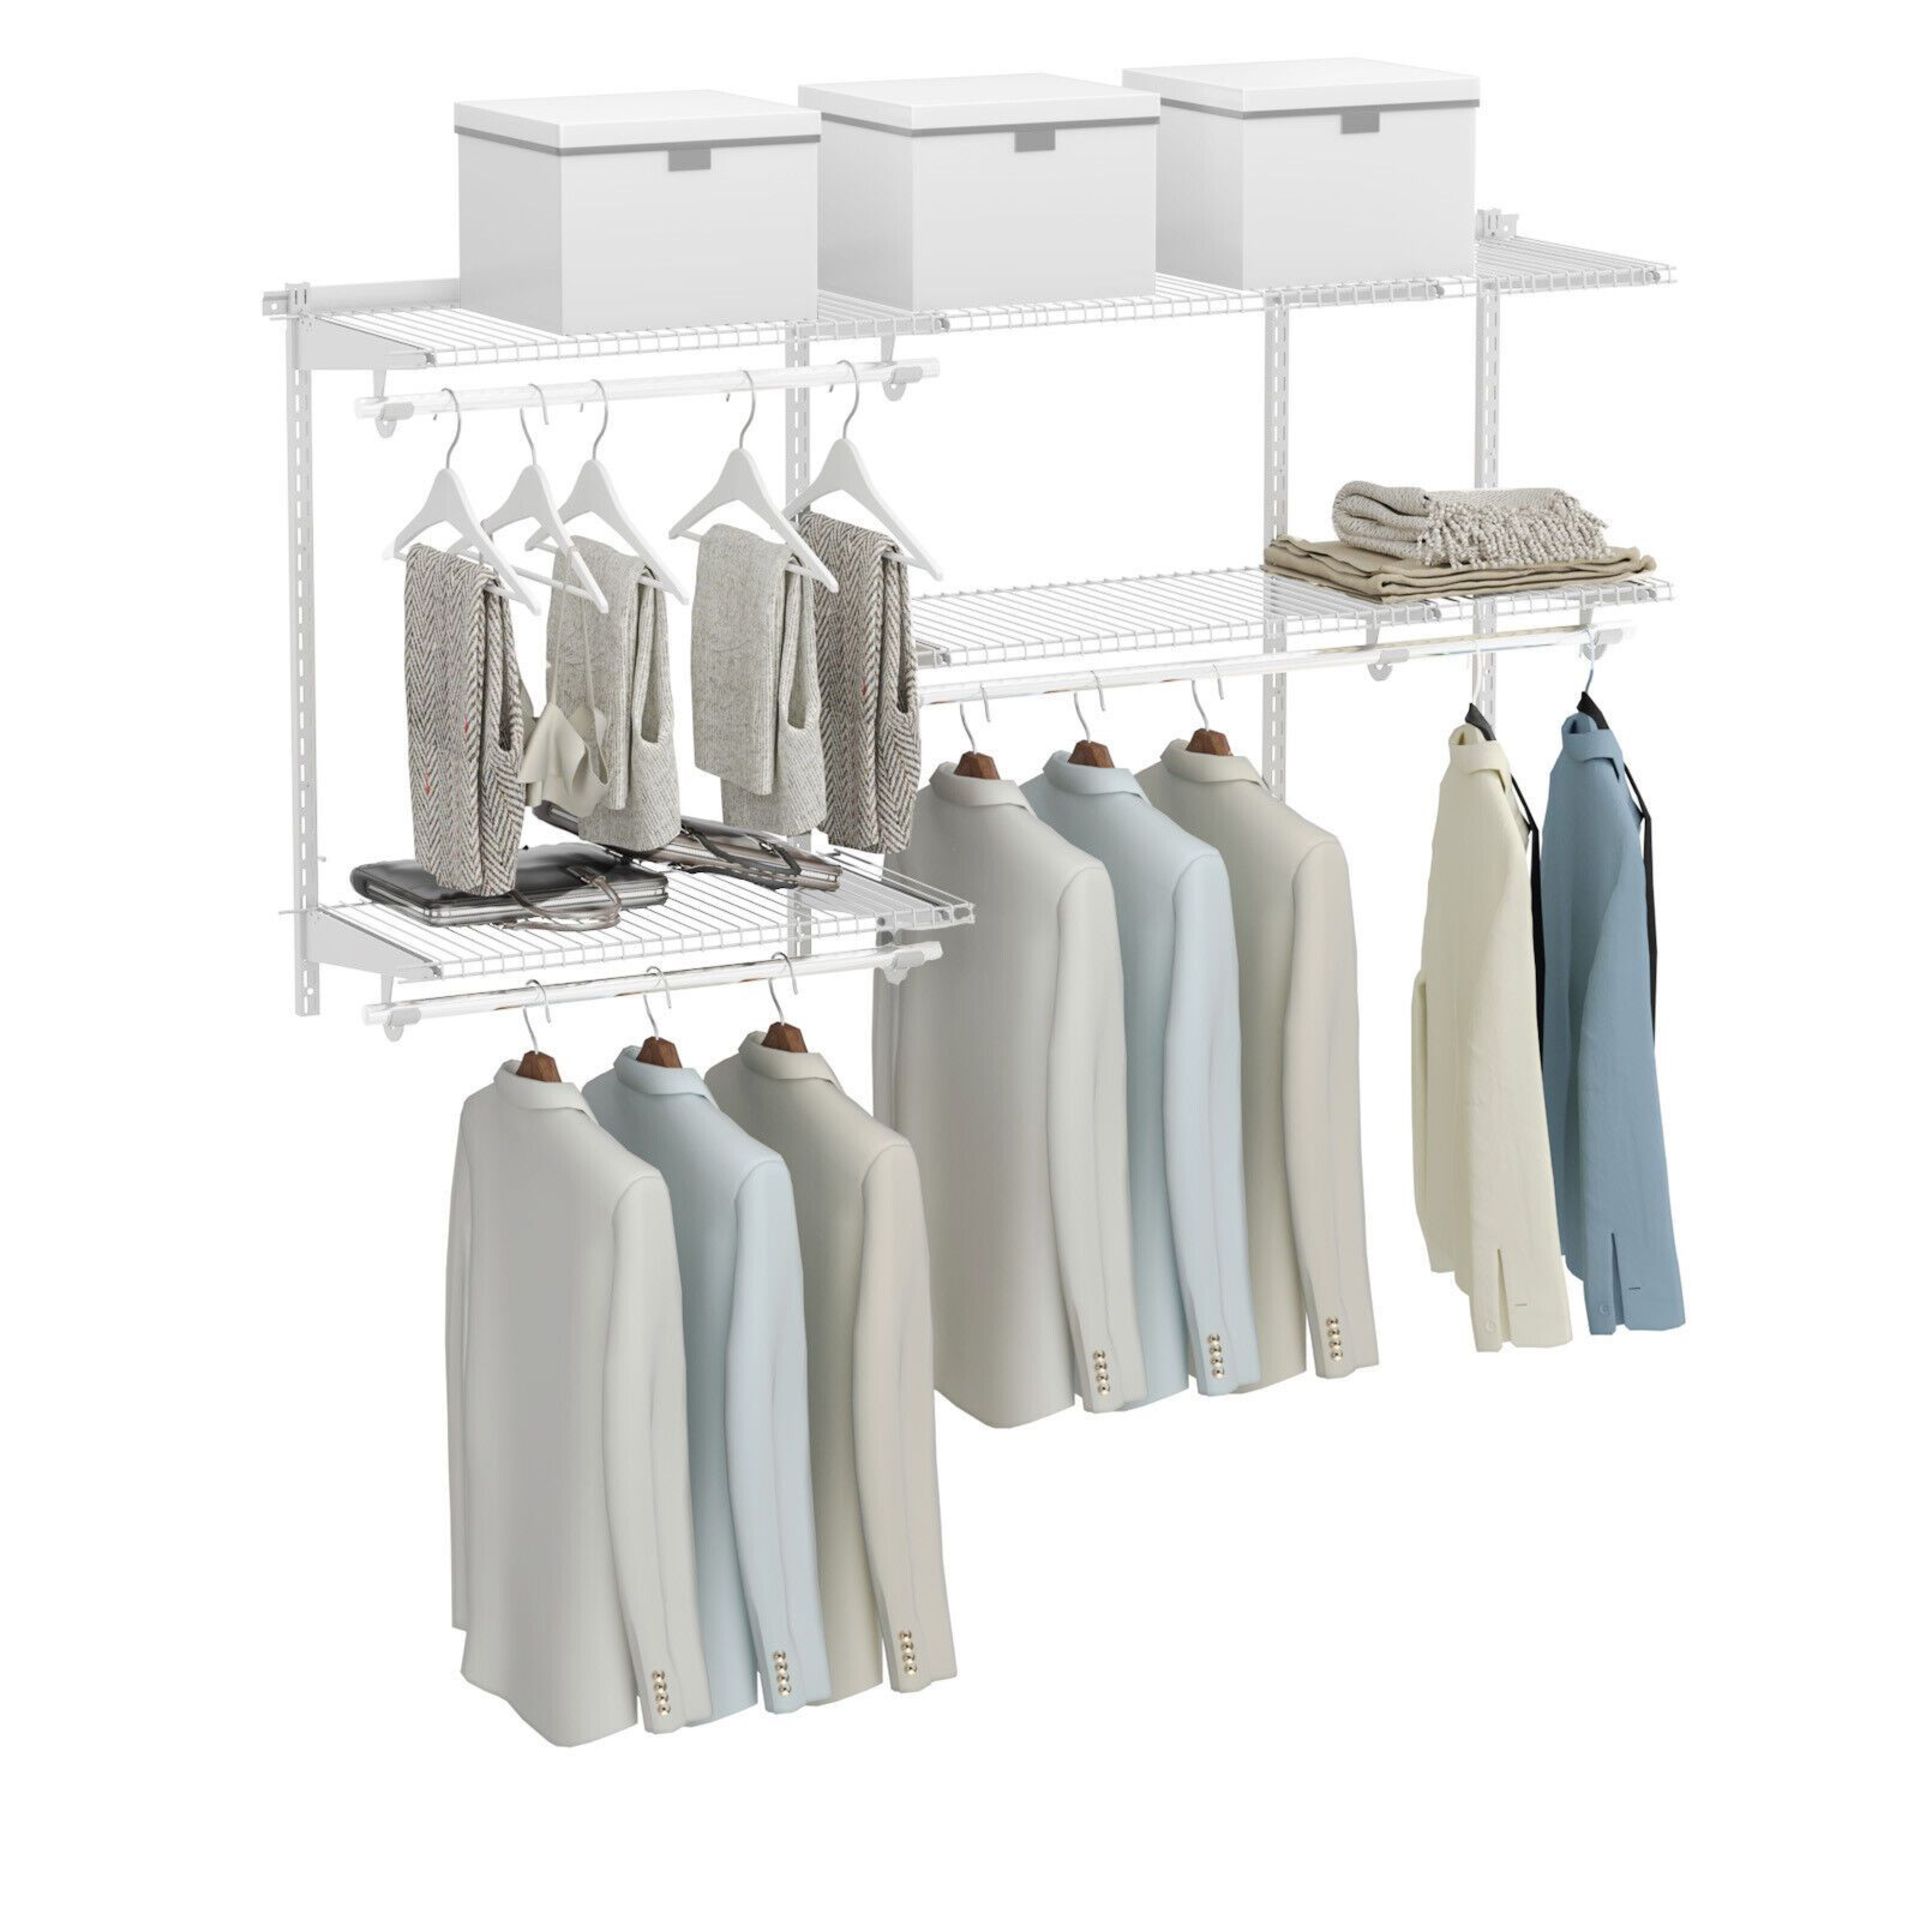 Custom Closet Organizer Kit Wall Mounted Adjustable 3 to 5 FT with Hanging Rod. - ER26.